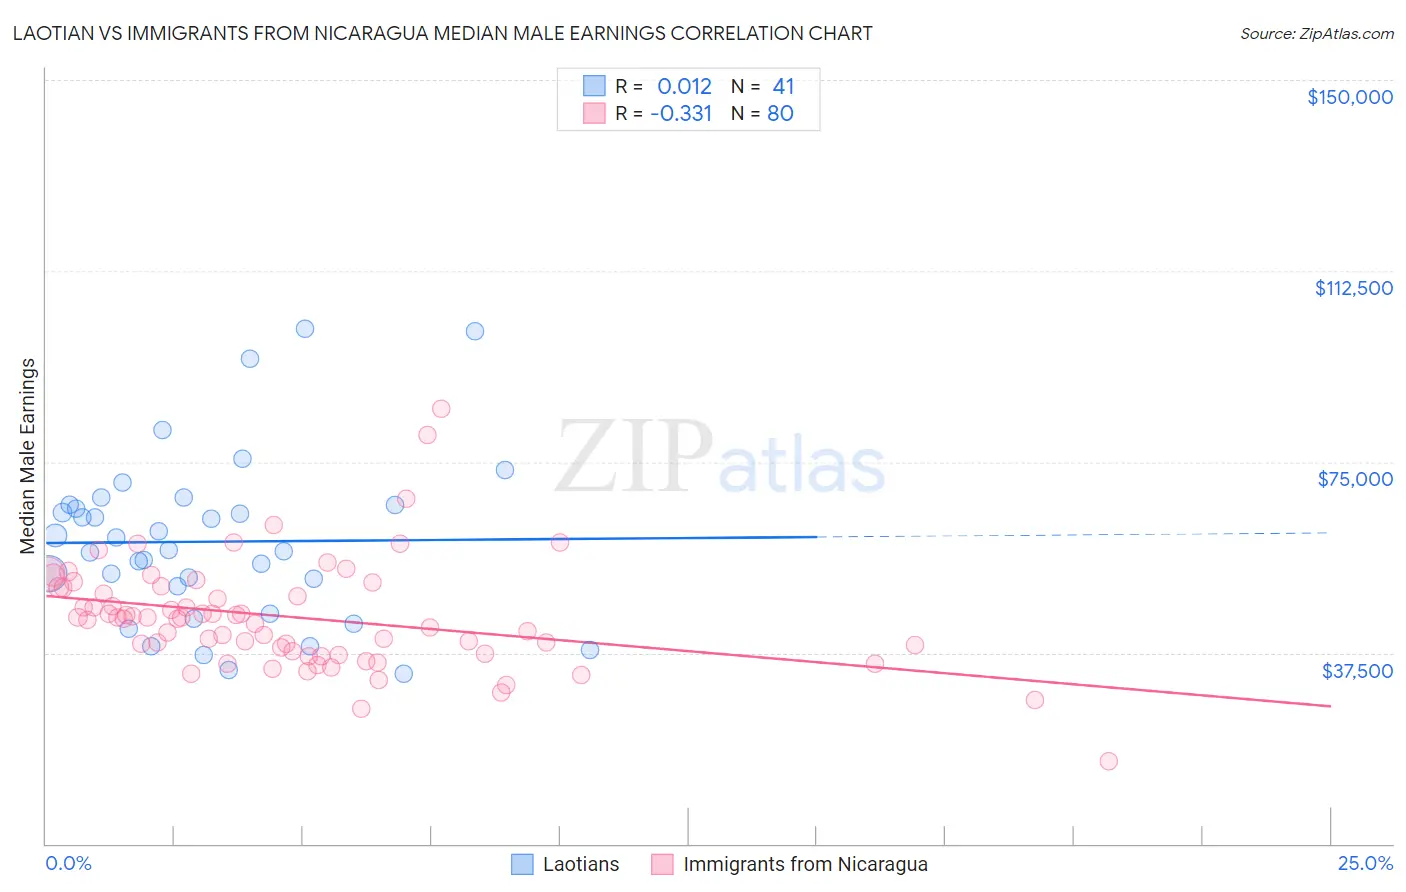 Laotian vs Immigrants from Nicaragua Median Male Earnings